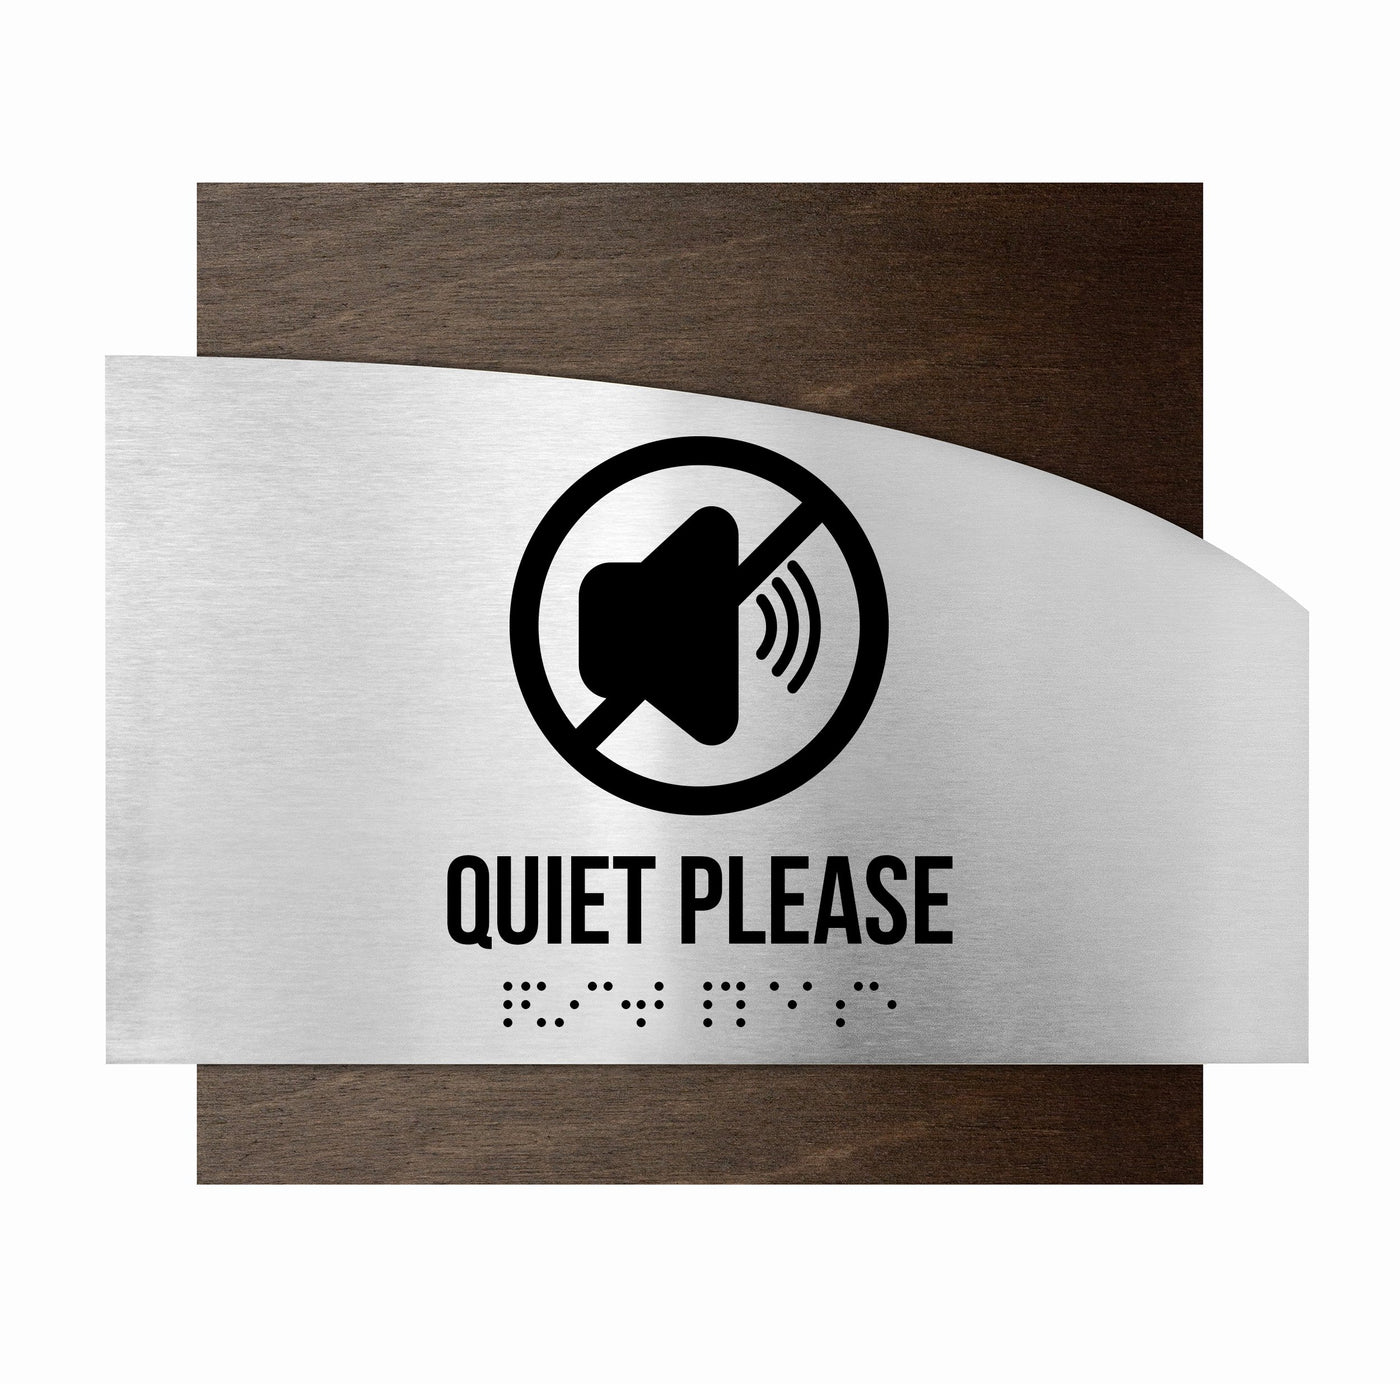 Information Signs - Quiet Please Sing Wood "Wave" Design